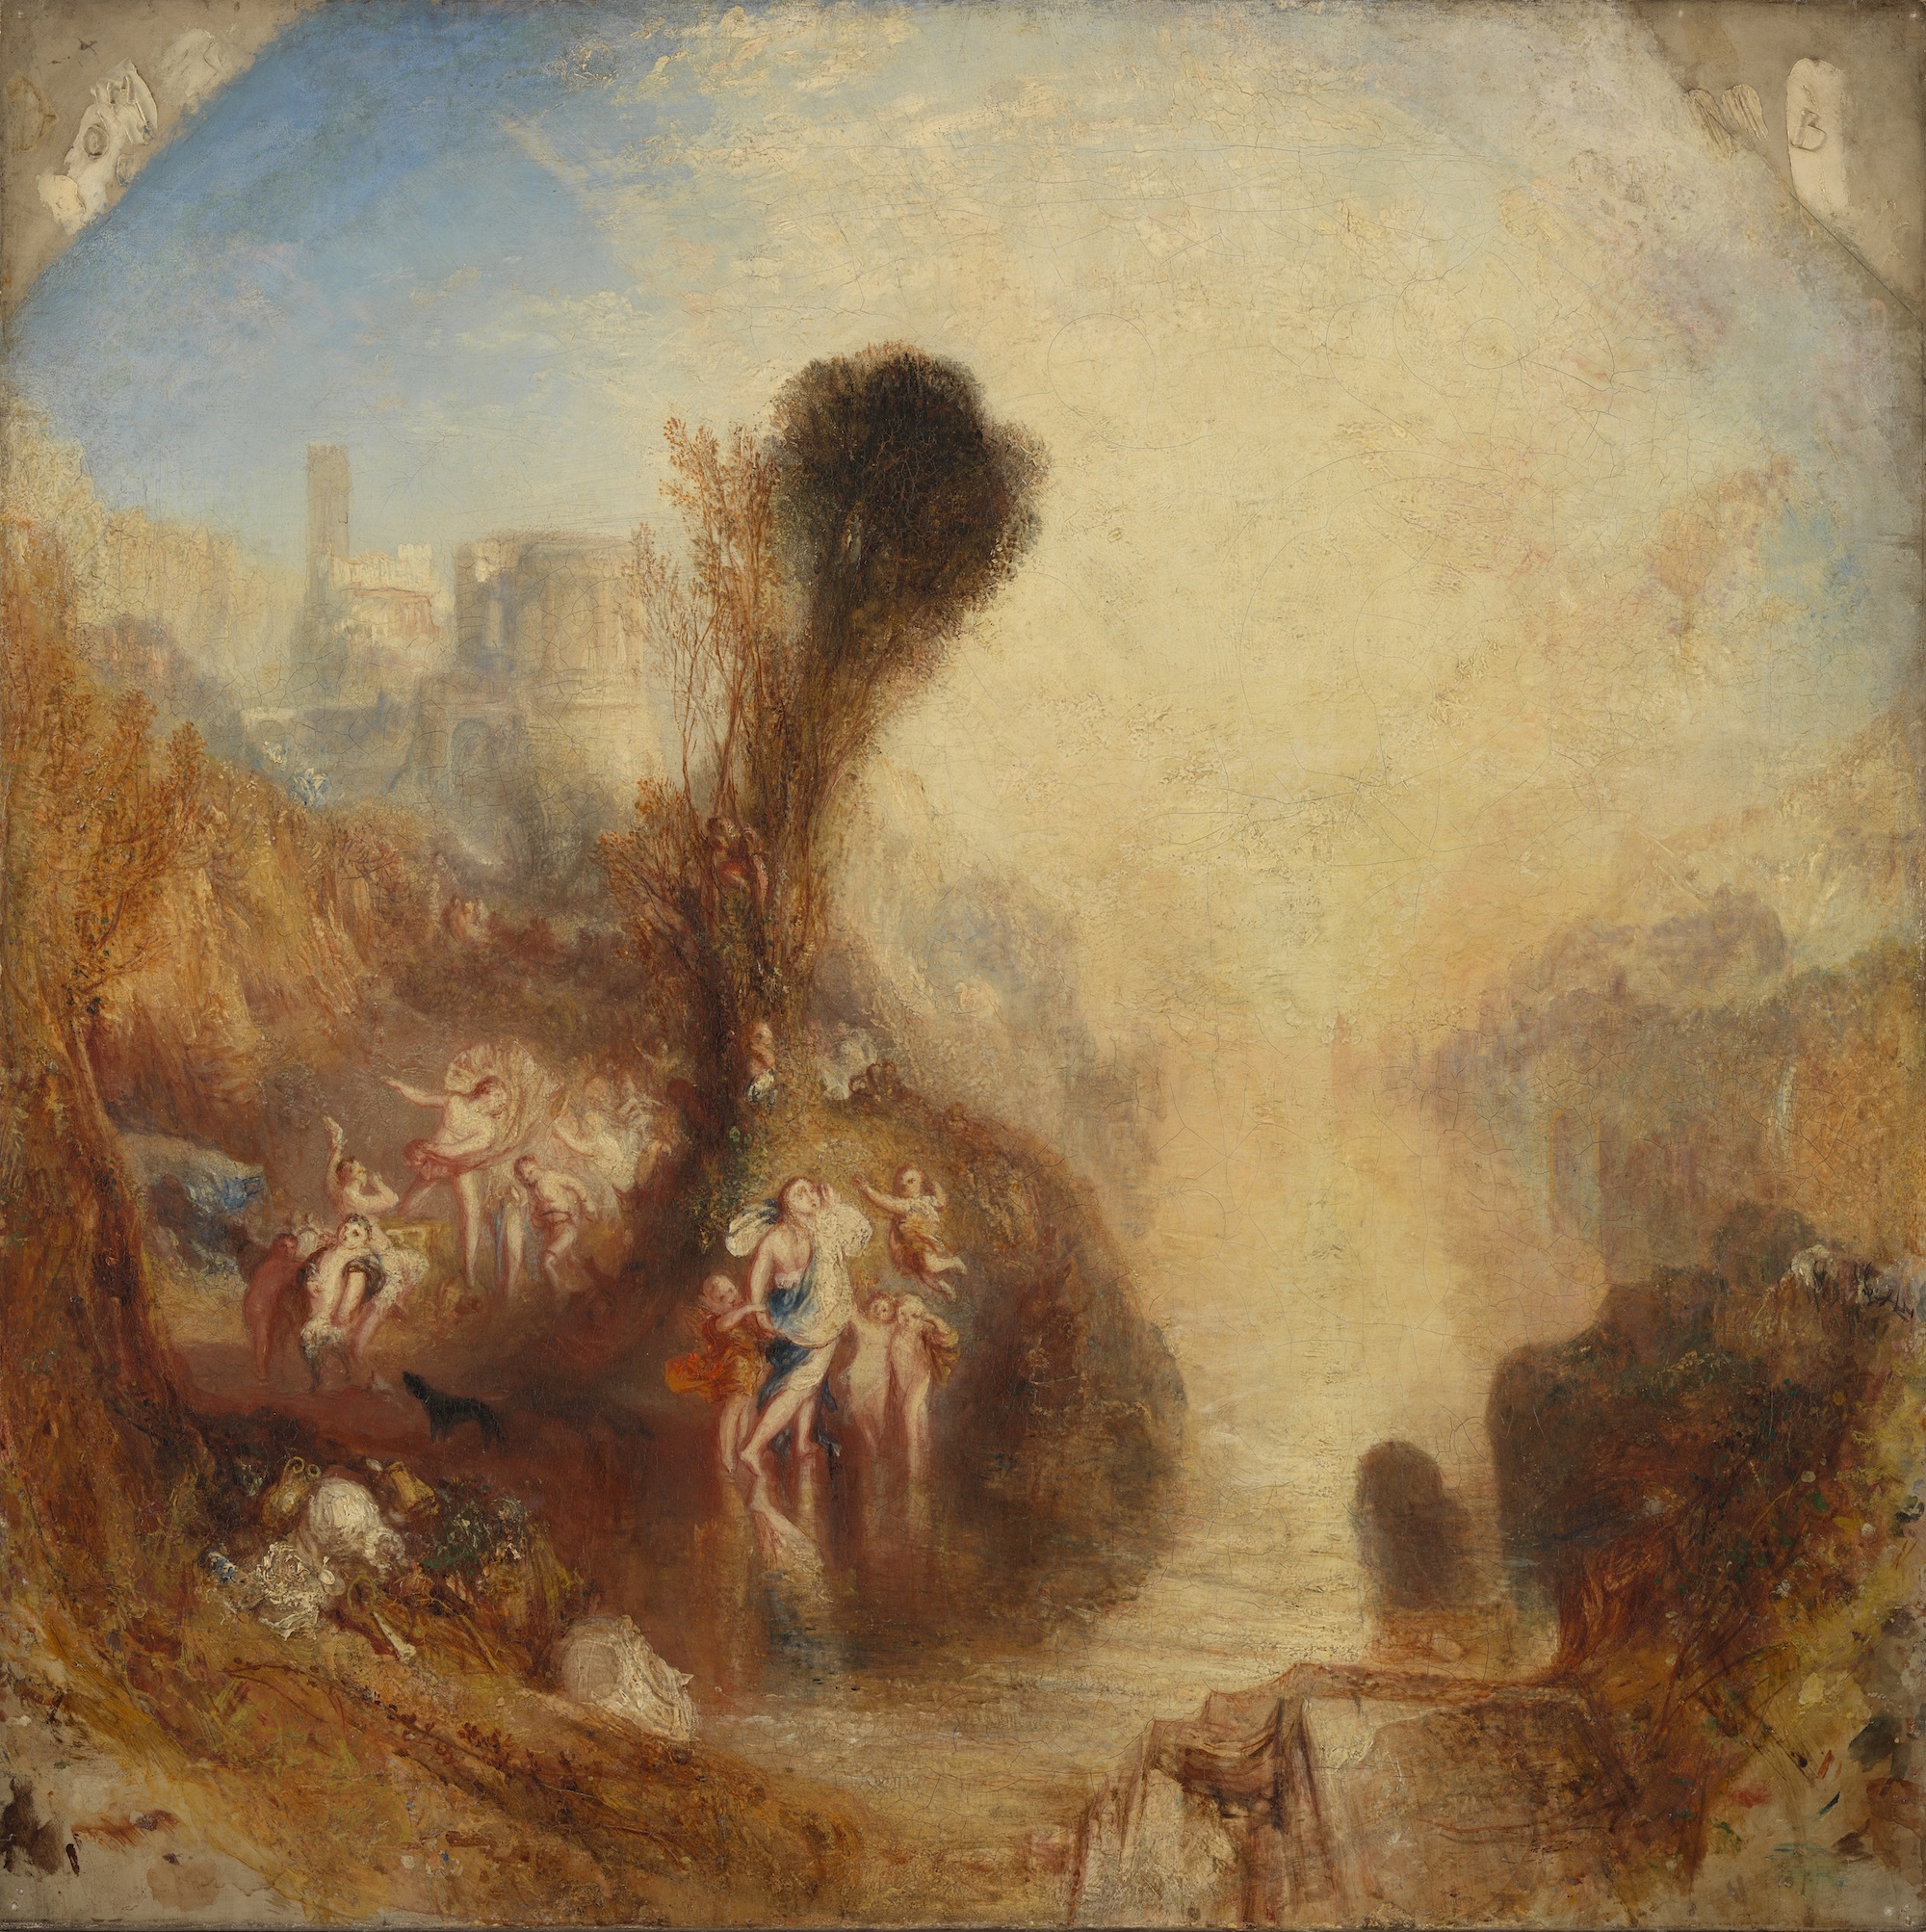 Joseph Mallord William Turner (1775-1851), Bacchus et Ariane, exposé en 1840. Huile sur toile. 78,7 x 78,7 cm. Londres, Tate. Photo service de presse. © Tate